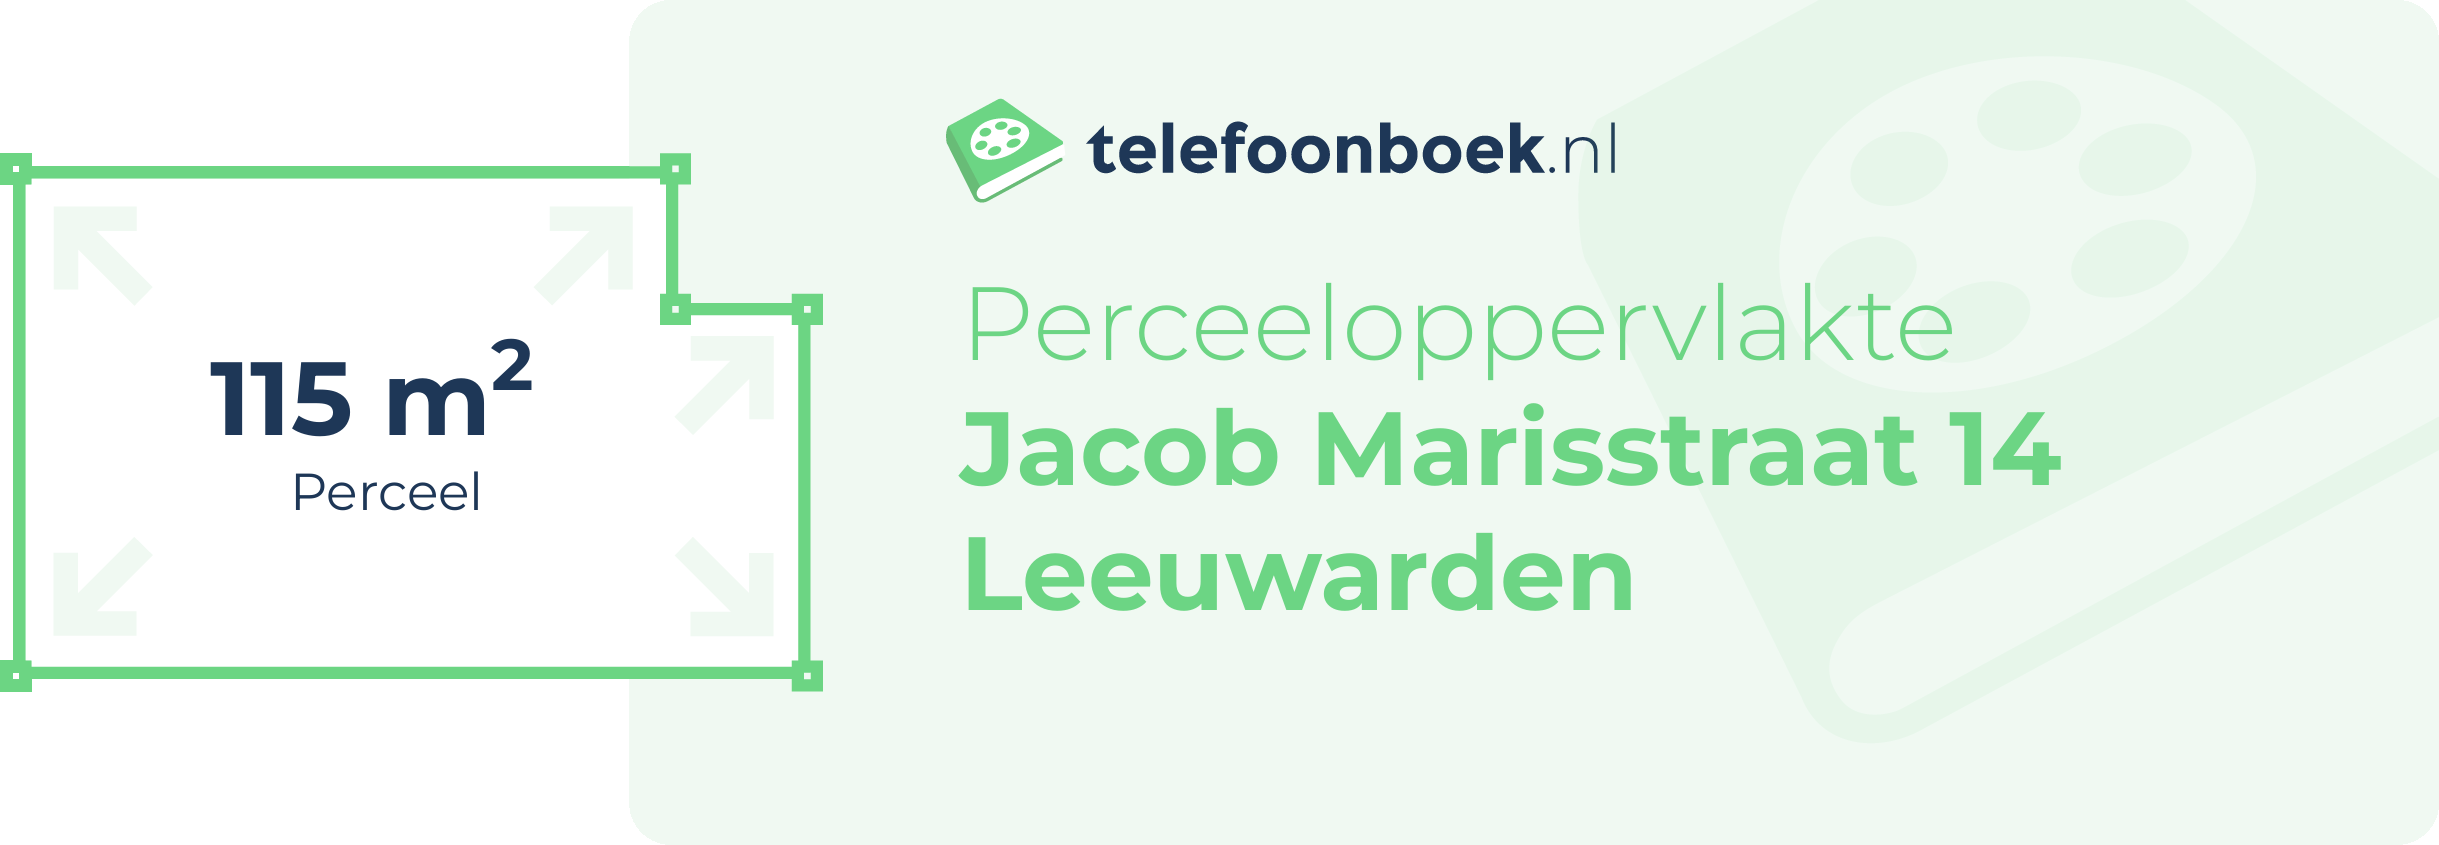 Perceeloppervlakte Jacob Marisstraat 14 Leeuwarden